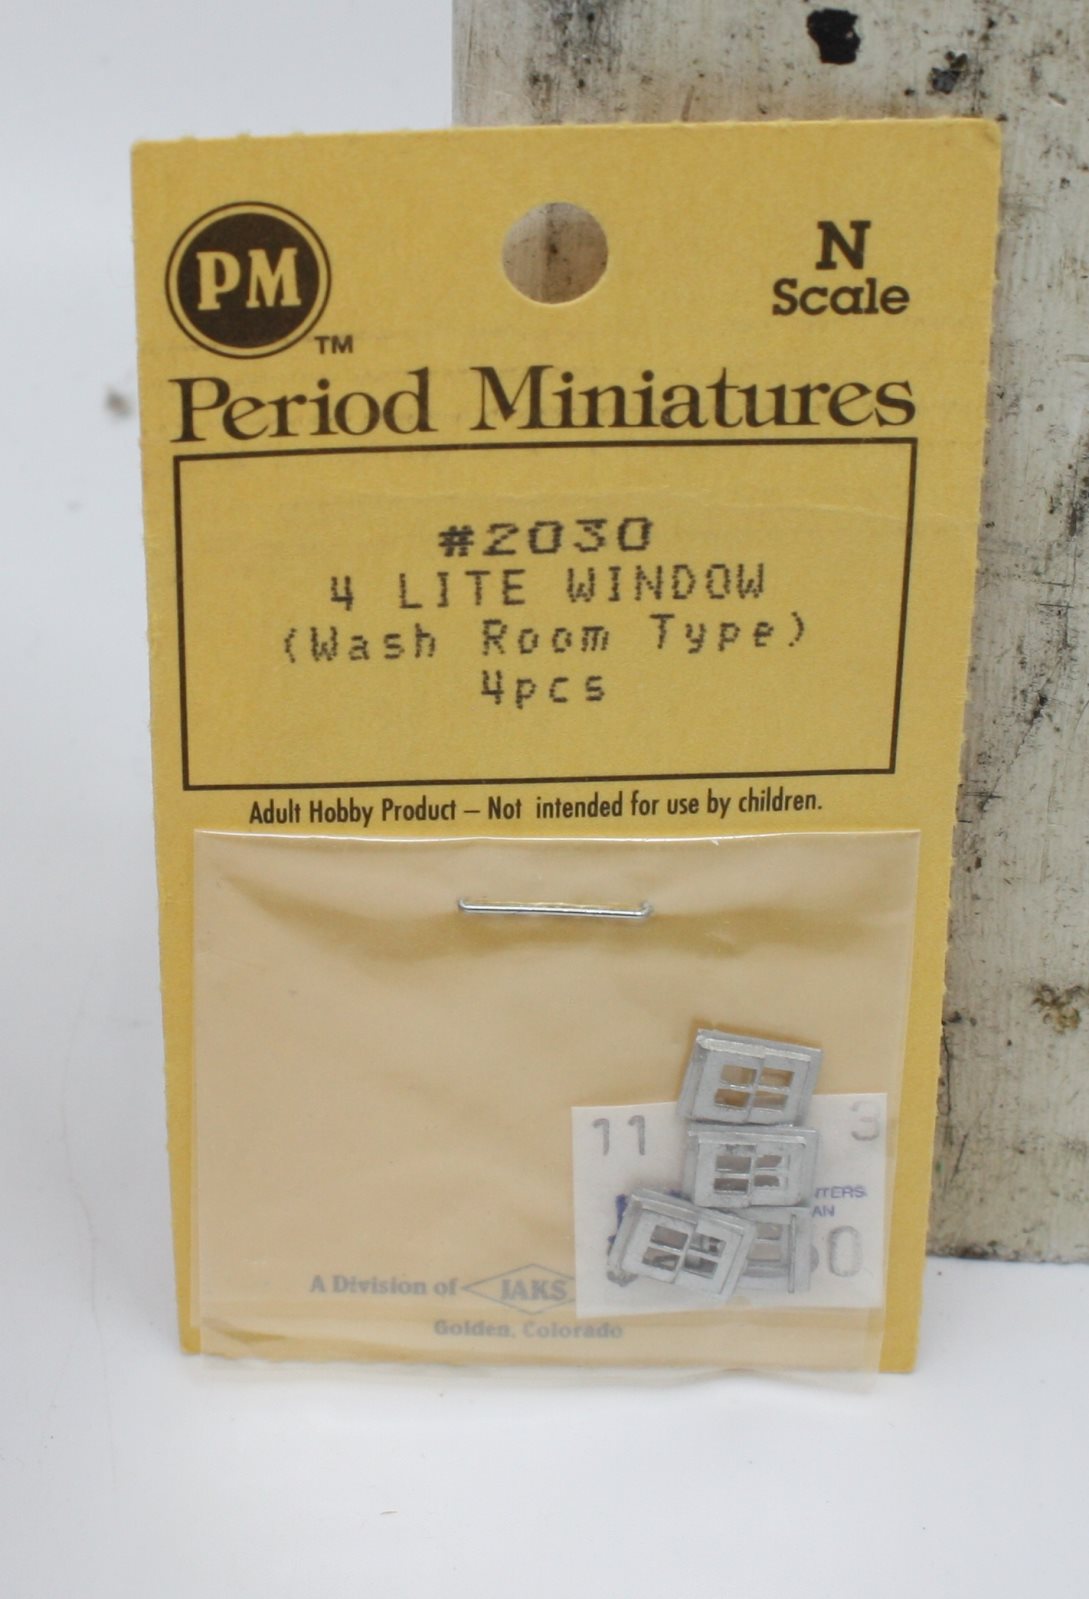 Period Miniatures 2030 N Scale 4 Lite Window